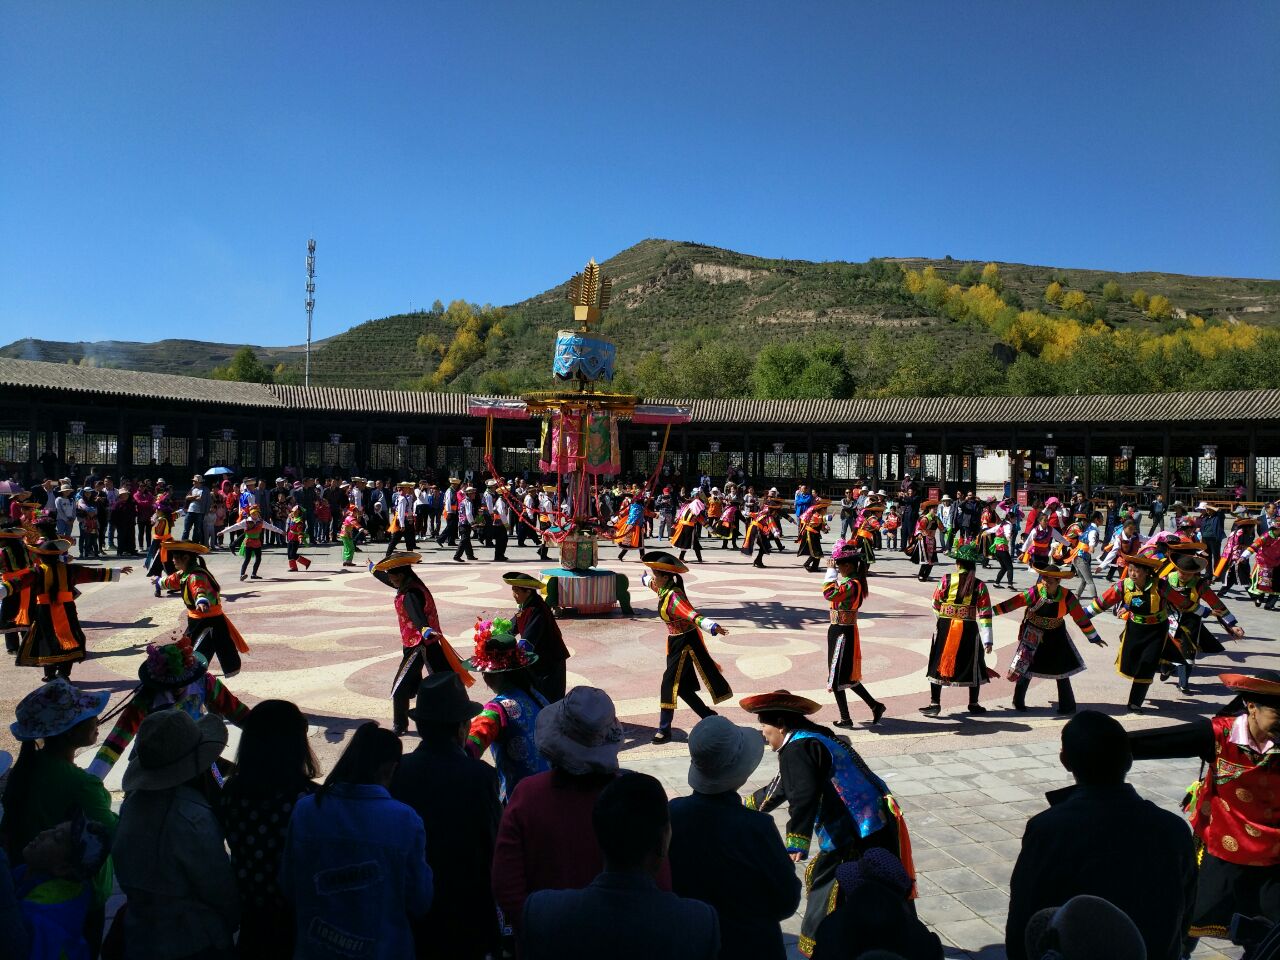 Huzhu Tu Ethnic Tours